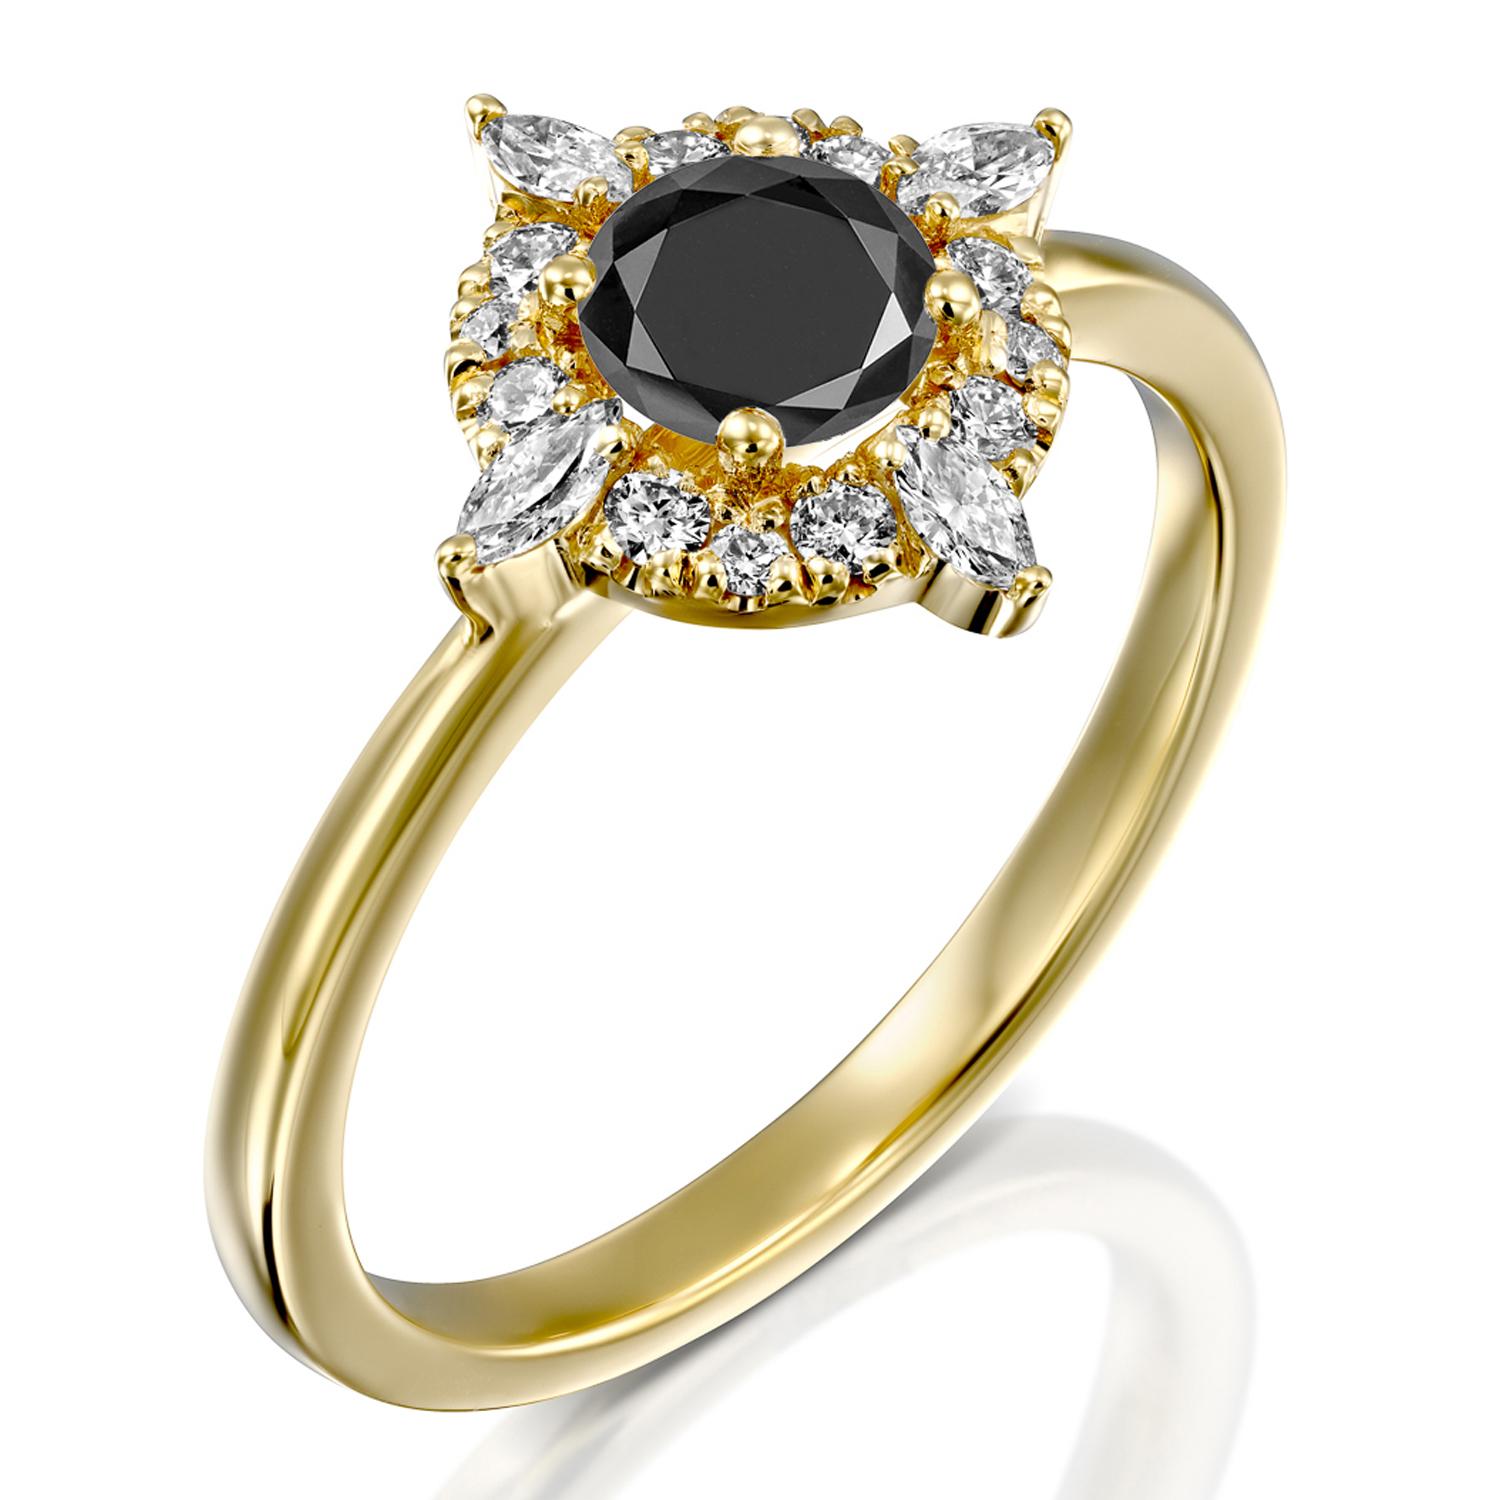 1 carat black diamond engagement ring